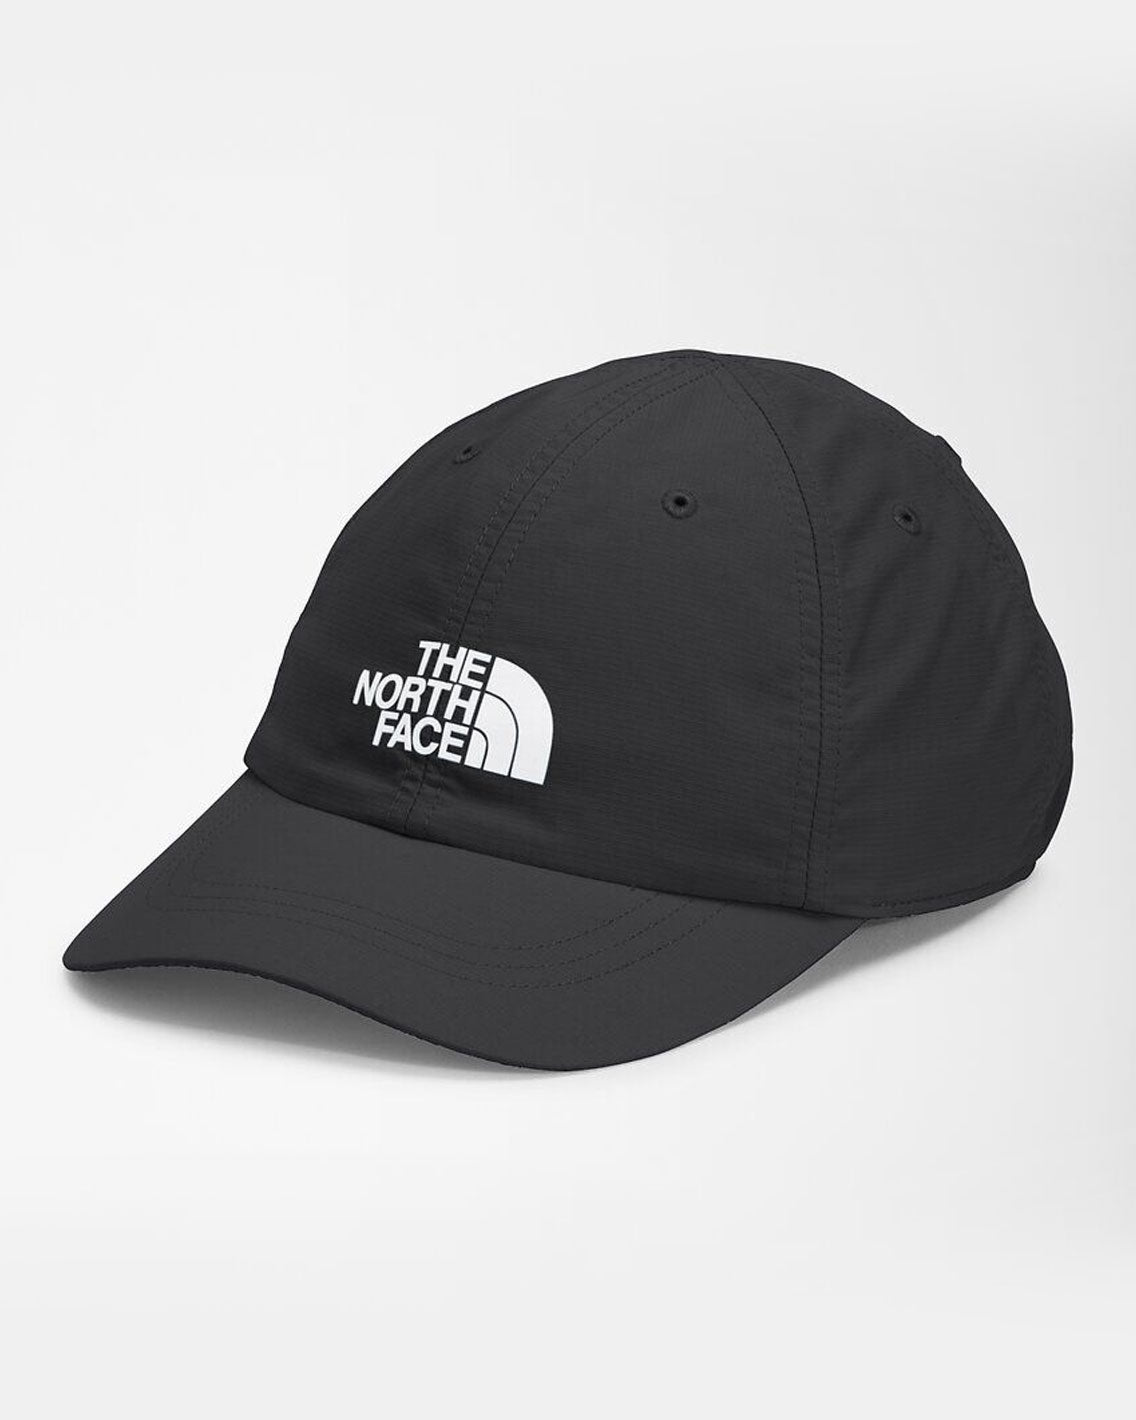 The North Face - Horizon Adjustable Hat - TNF Black